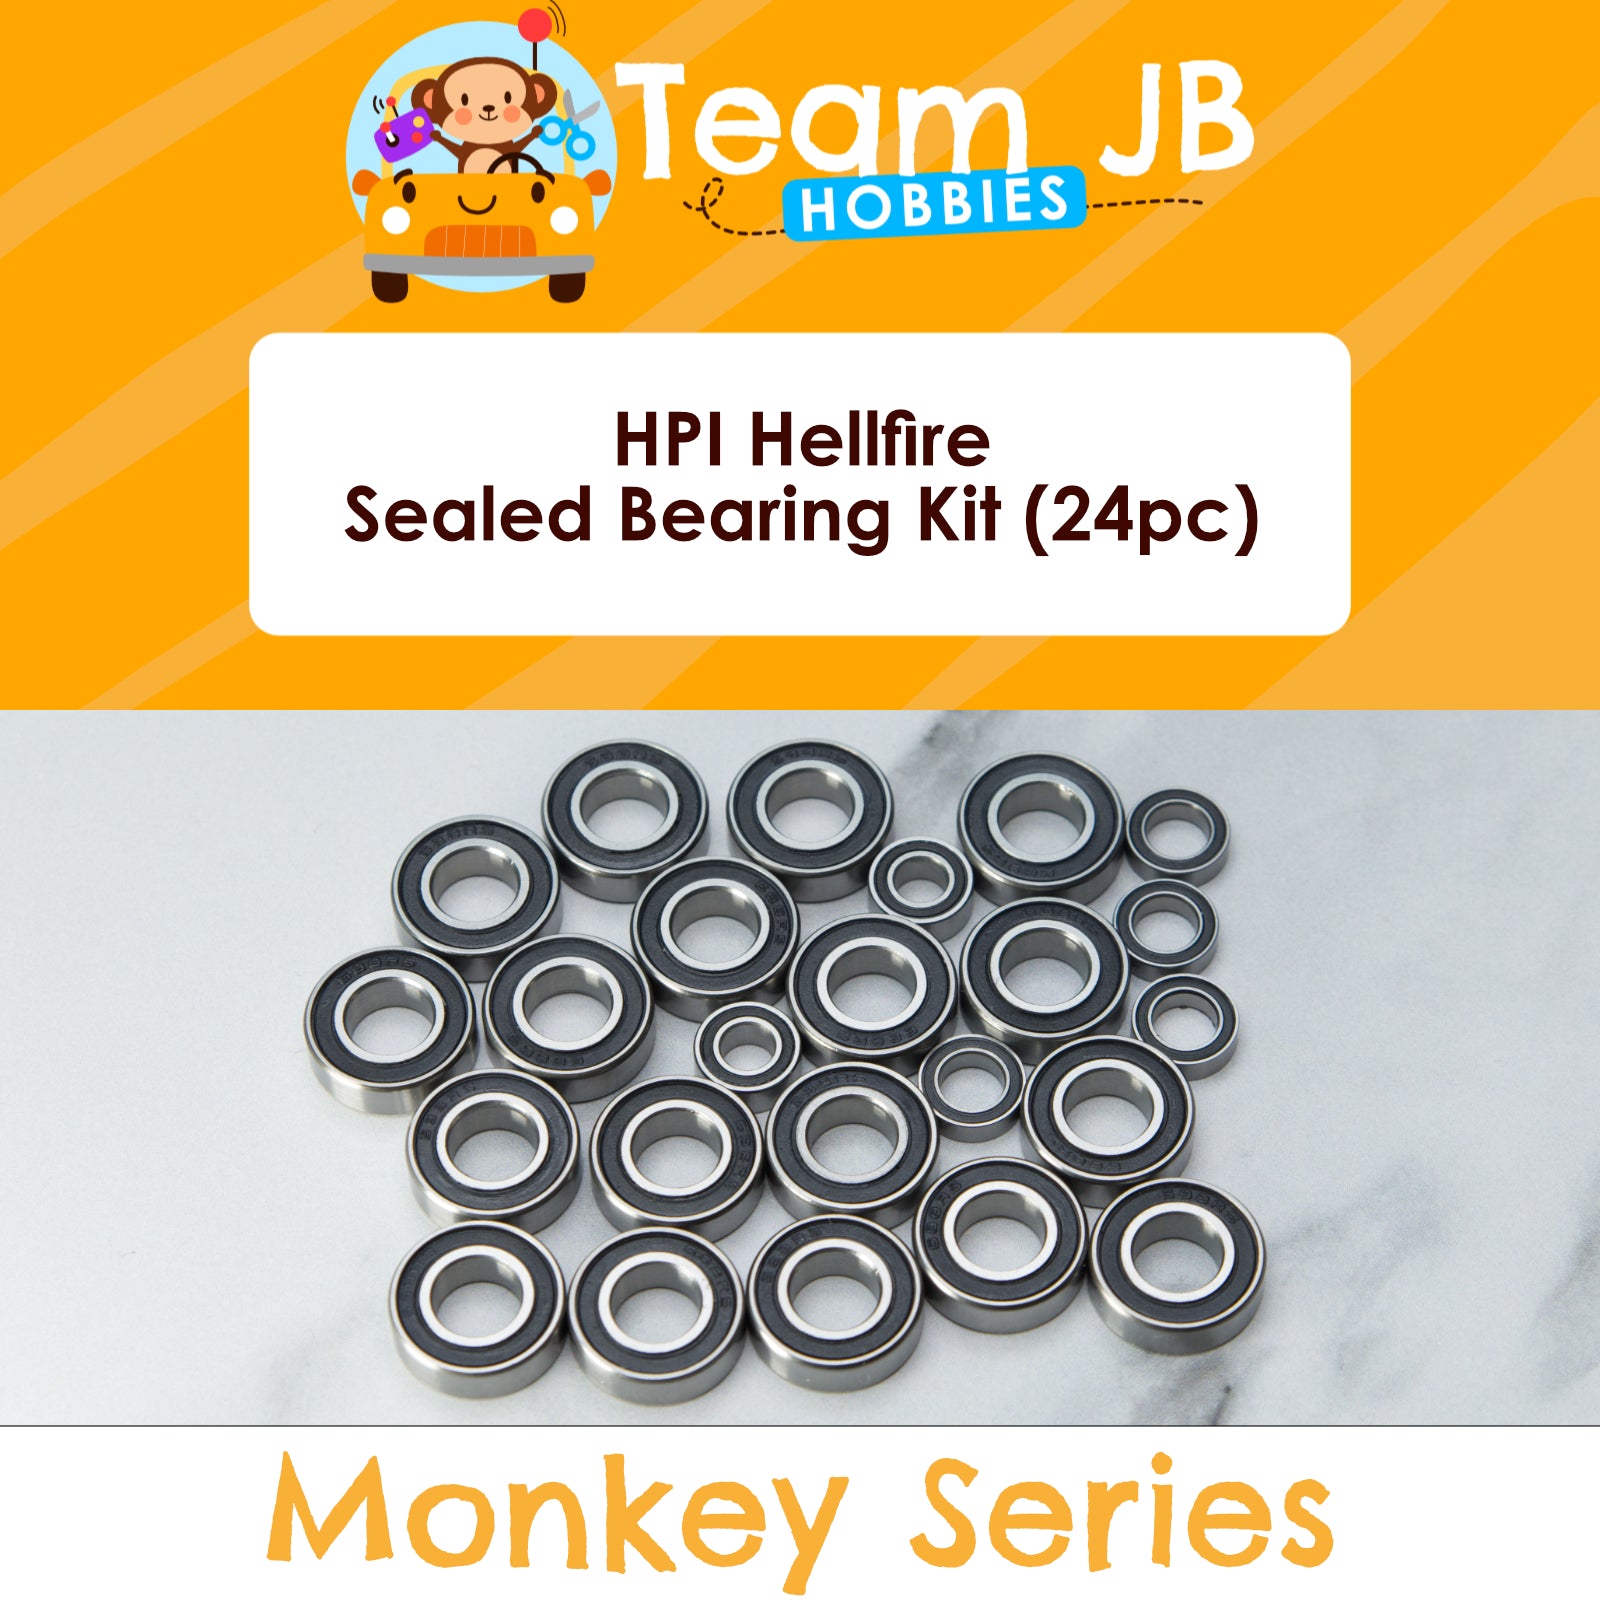 HPI Hellfire - Sealed Bearing Kit